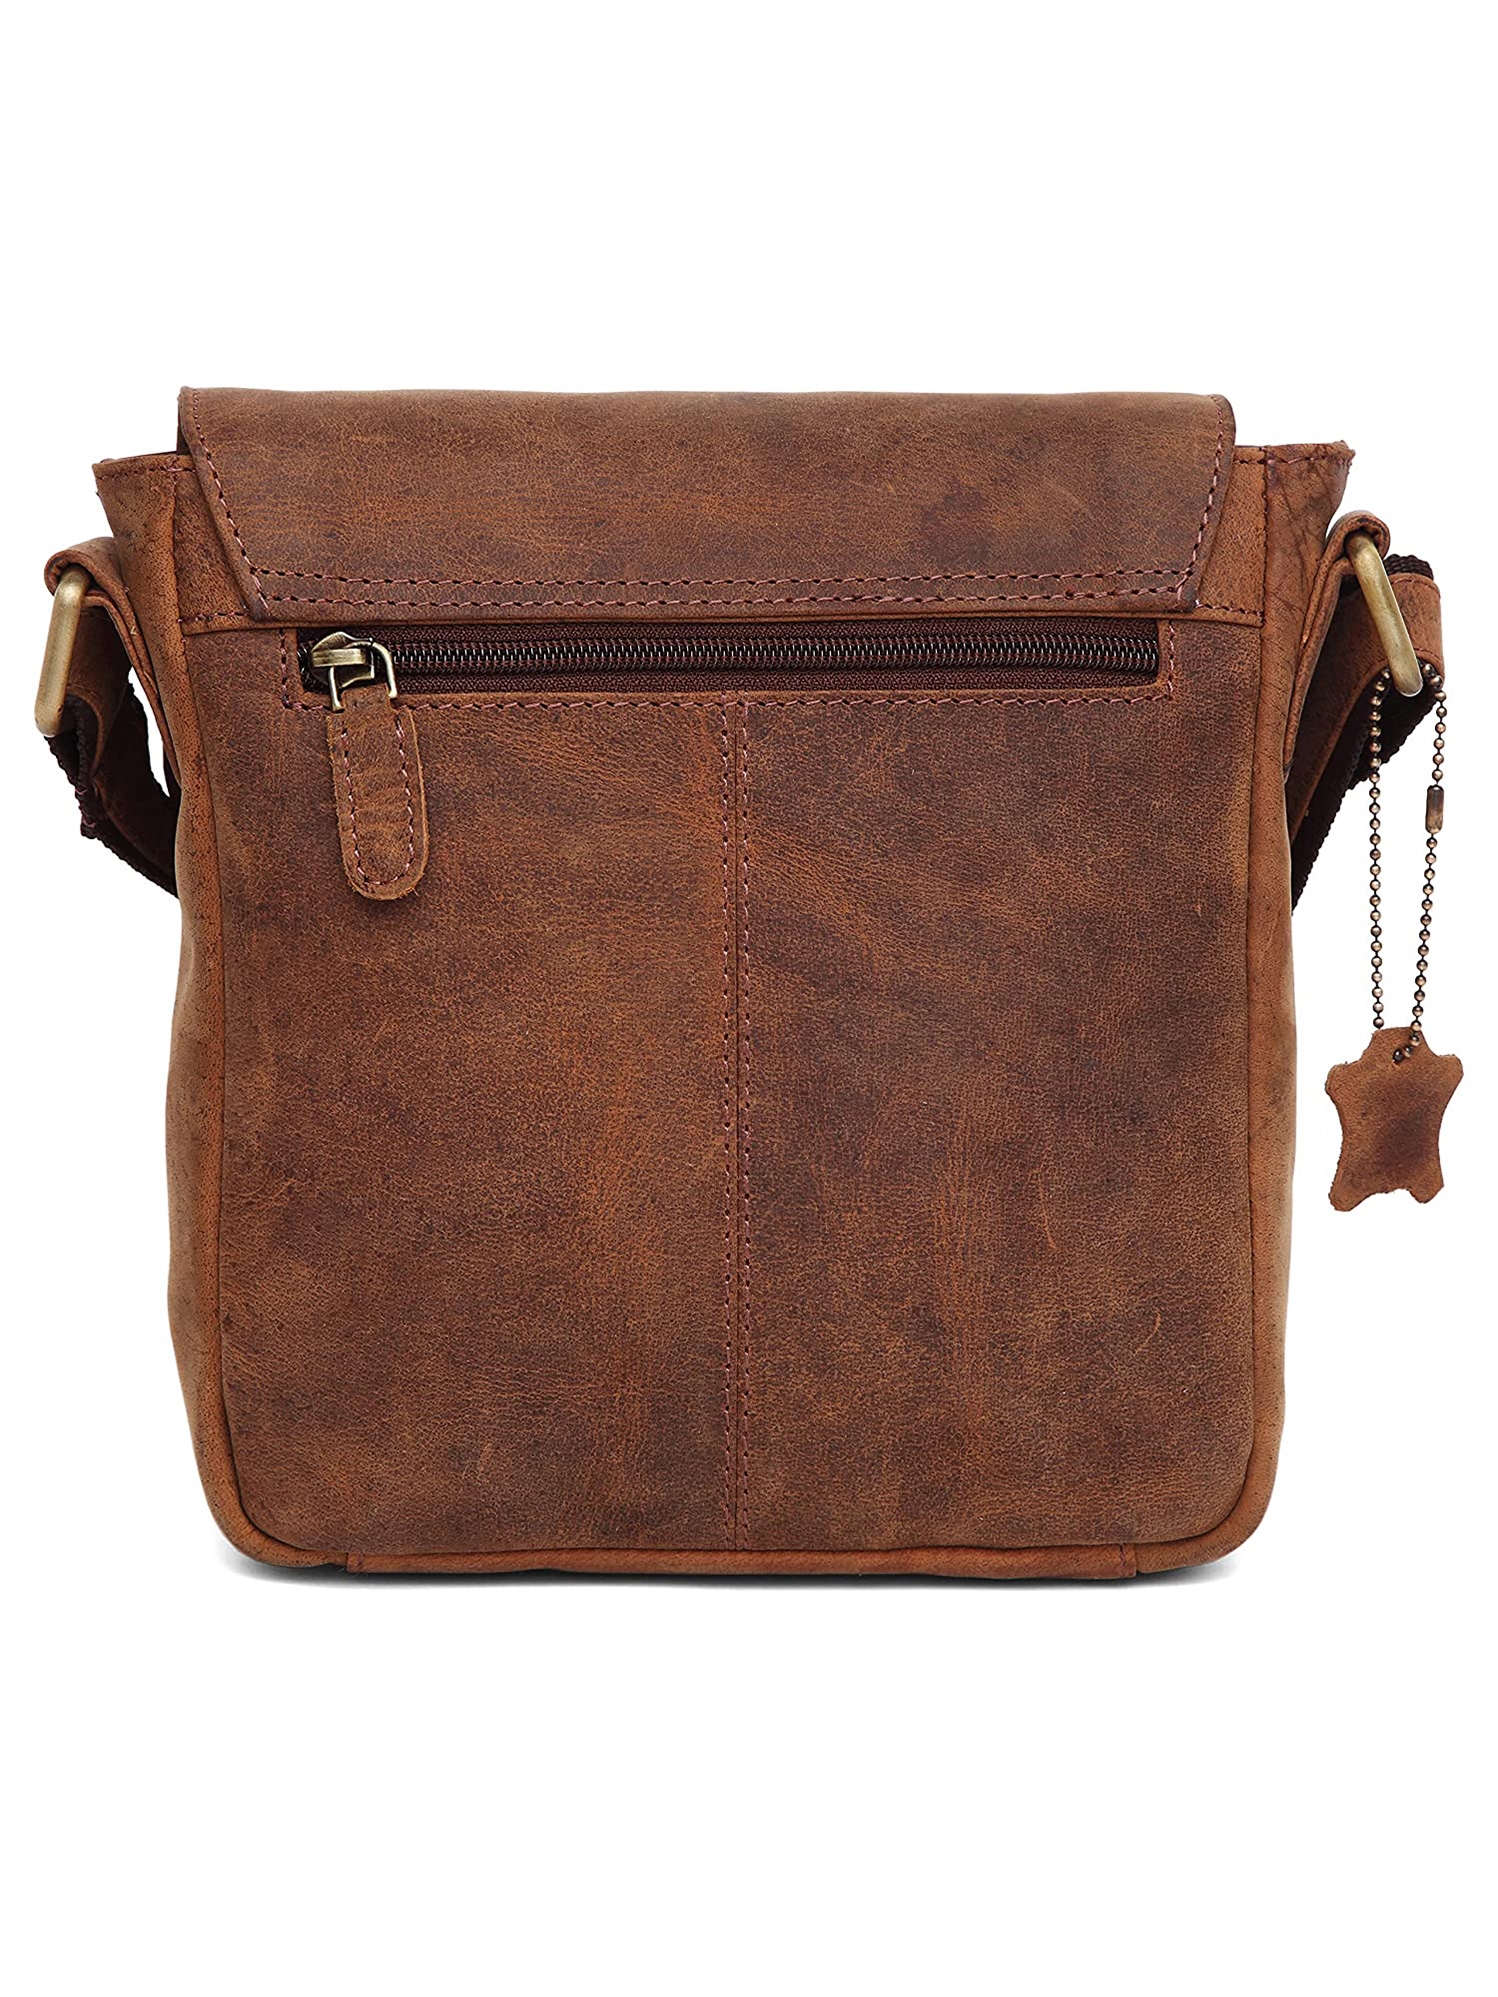 WildHorn 100% Genuine Classic Leather Tan Sling Bag for Men